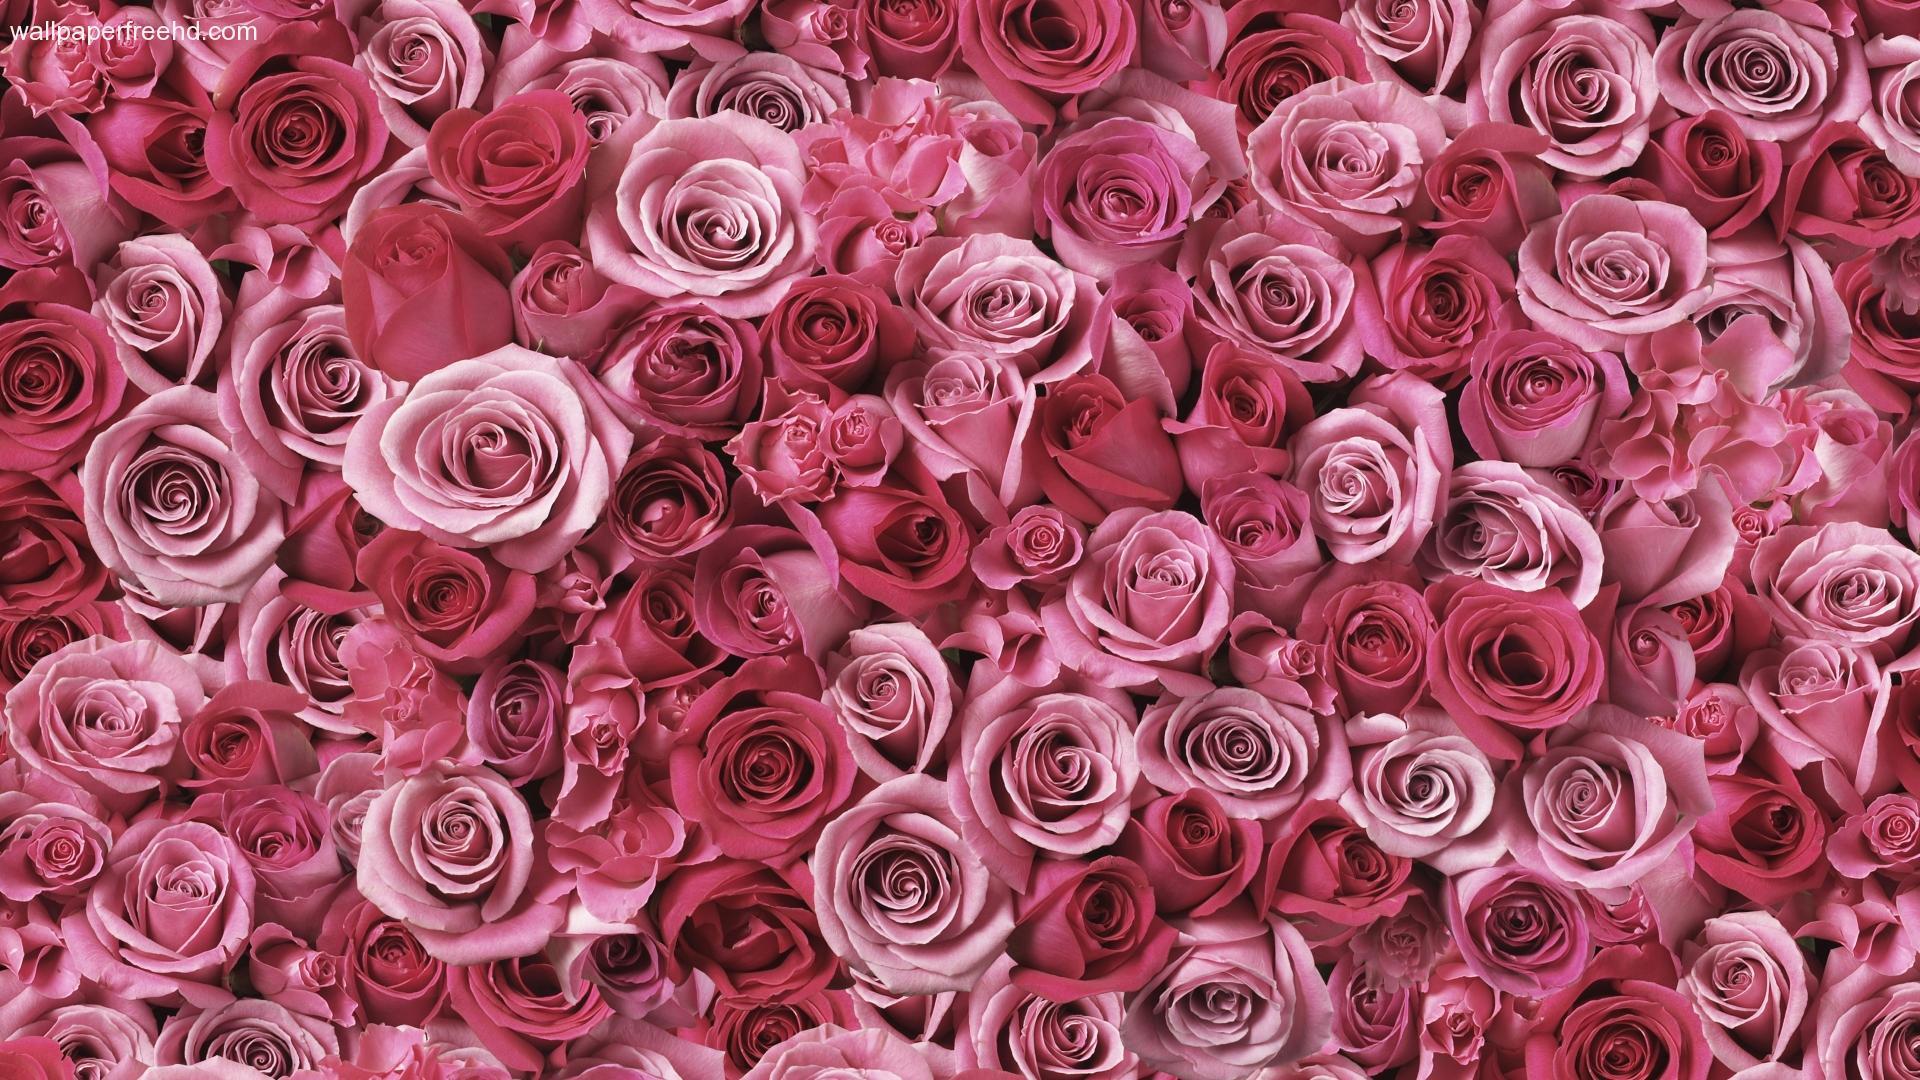 Pink Wallpaper Tumblr Roses for Desktop Background. Free